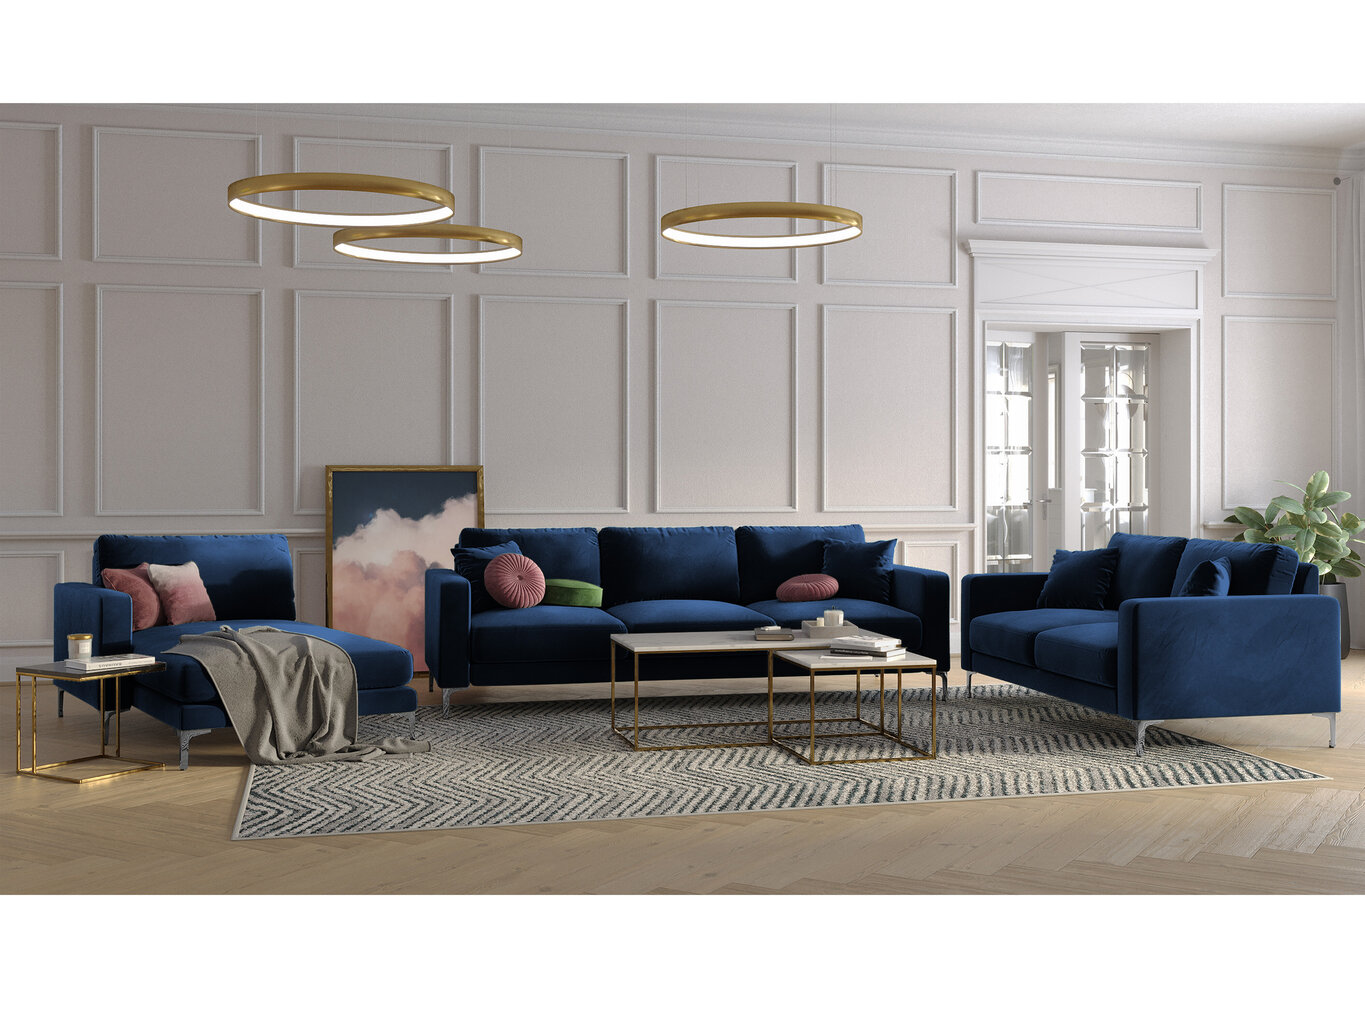 Dvivietė aksominė sofa Kooko Home Lyrique, mėlyna kaina ir informacija | Sofos | pigu.lt